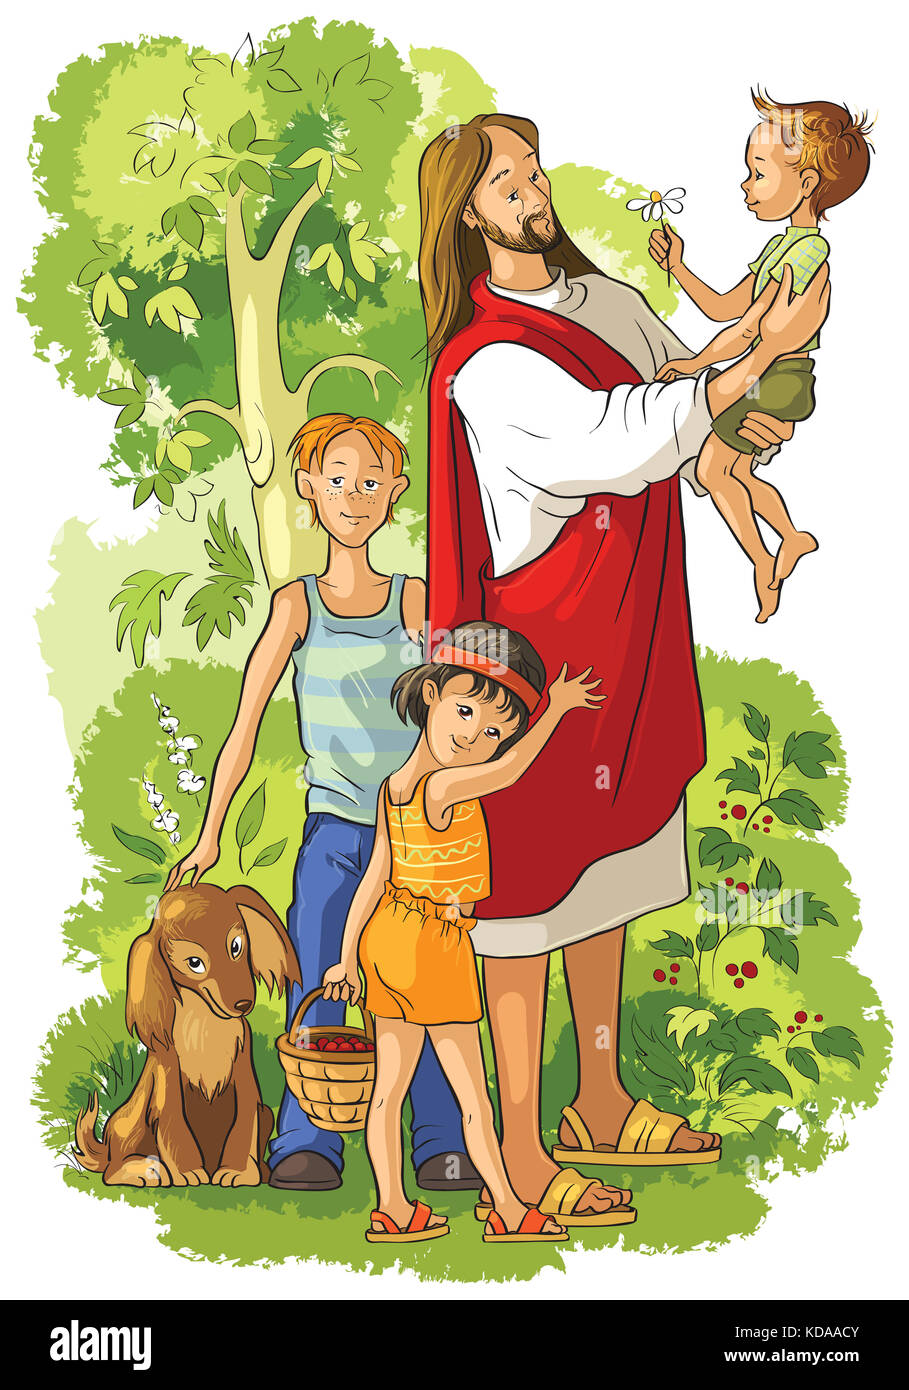 Jesus with Children. Christian cartoon illustration Stock Photo - Alamy